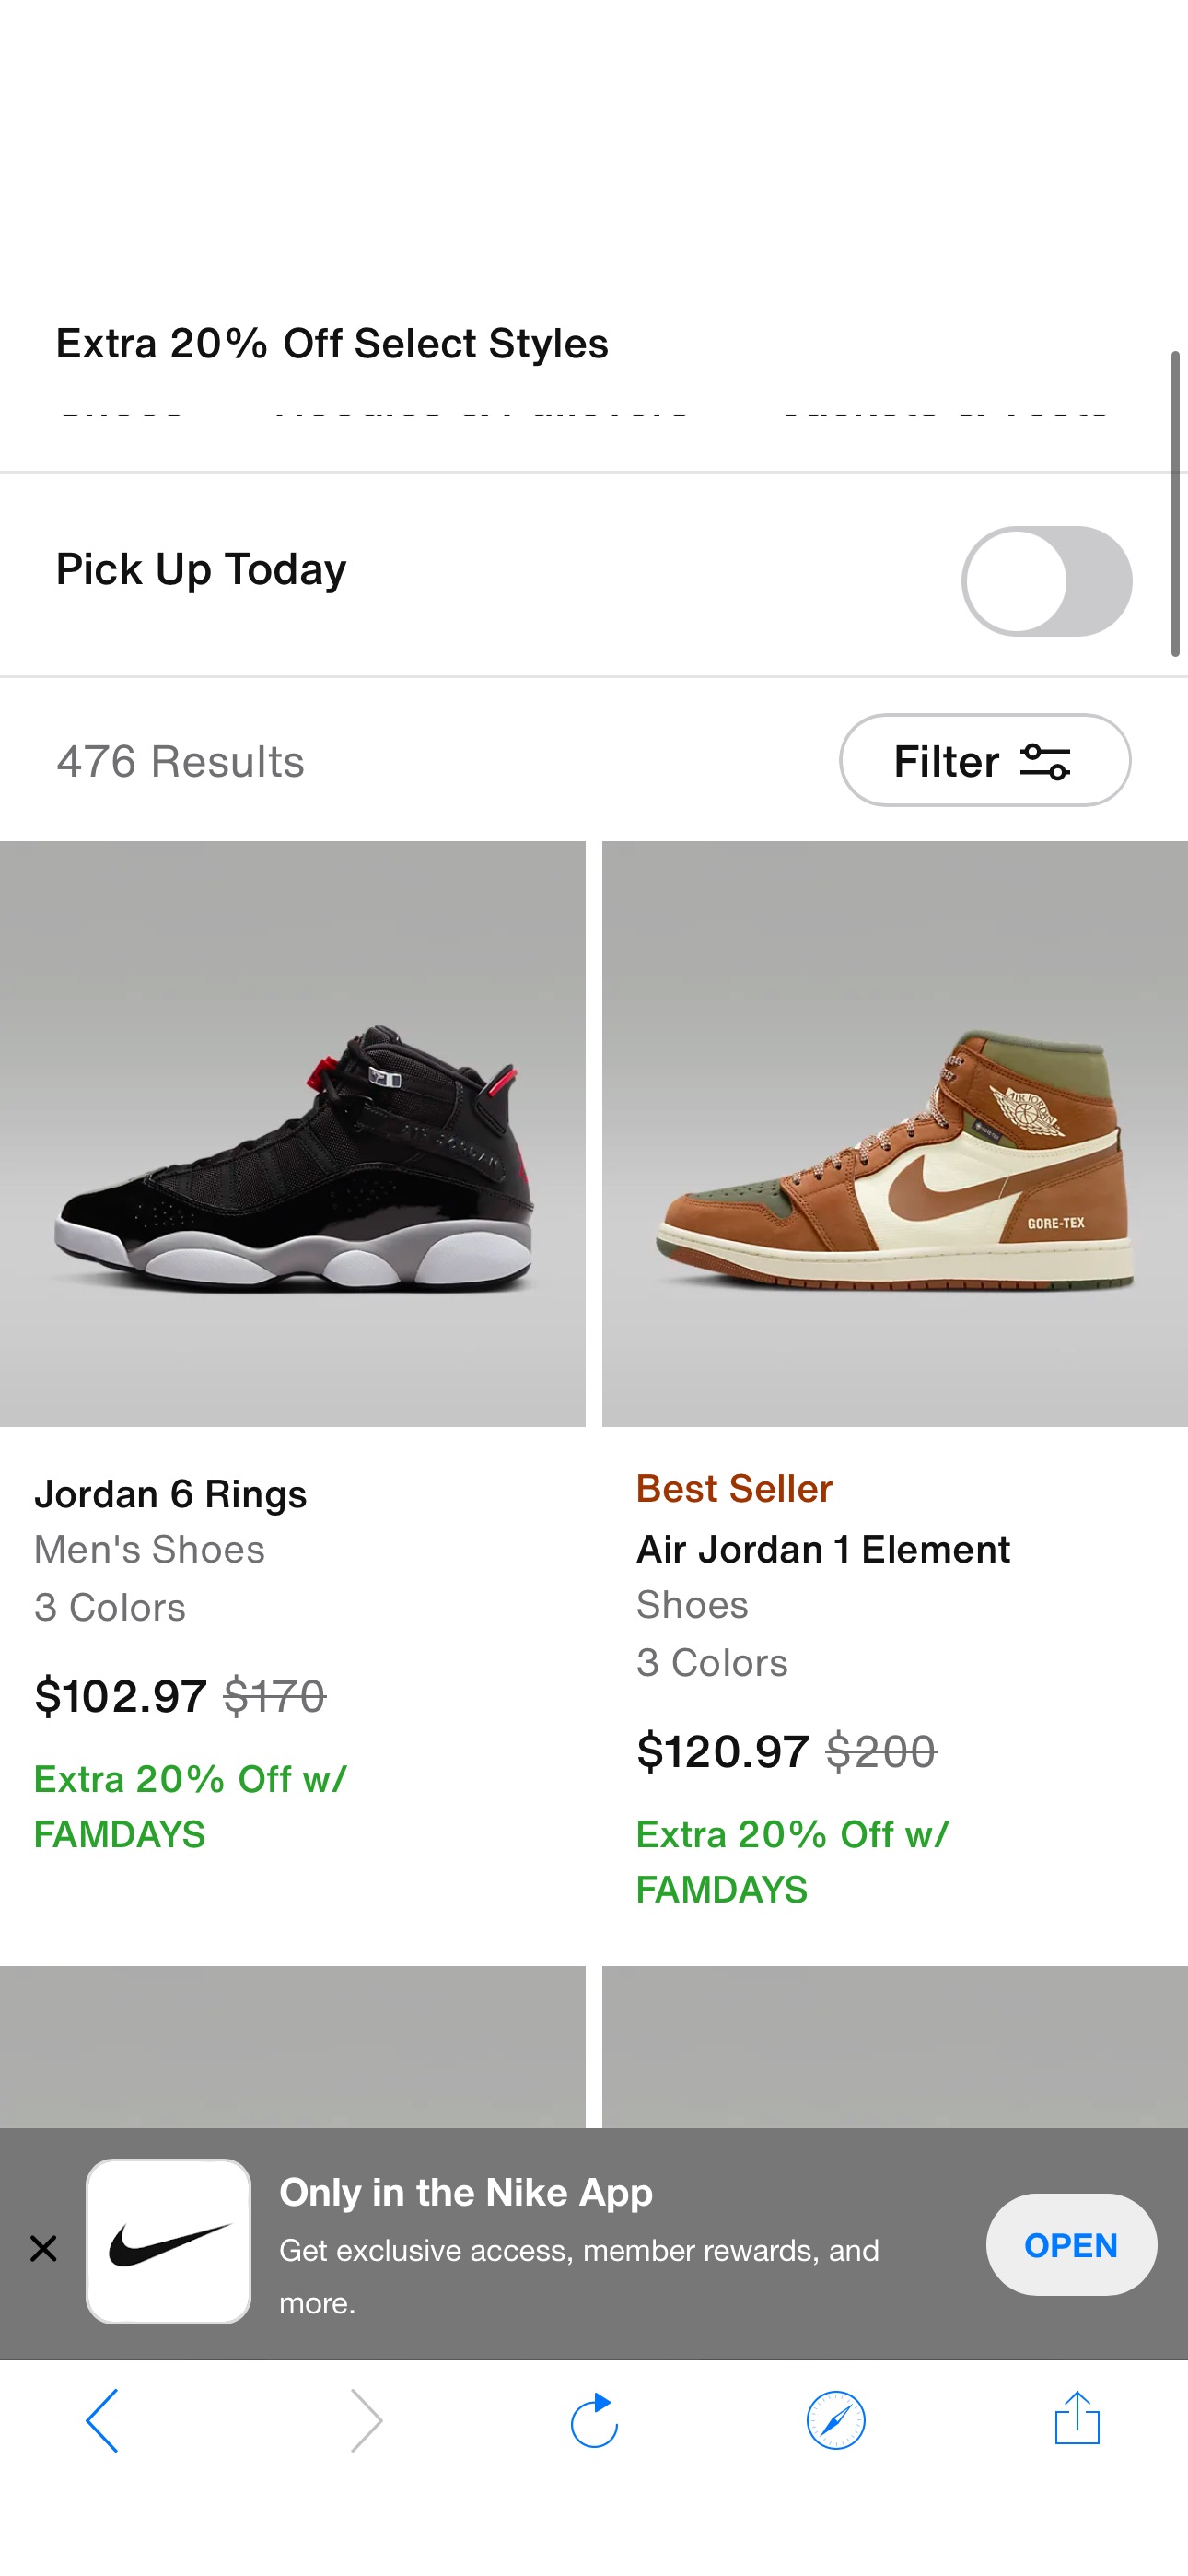 Jordan Promotion. Nike.com Extra 20% off Jordans 

Use code : FAMDAYS